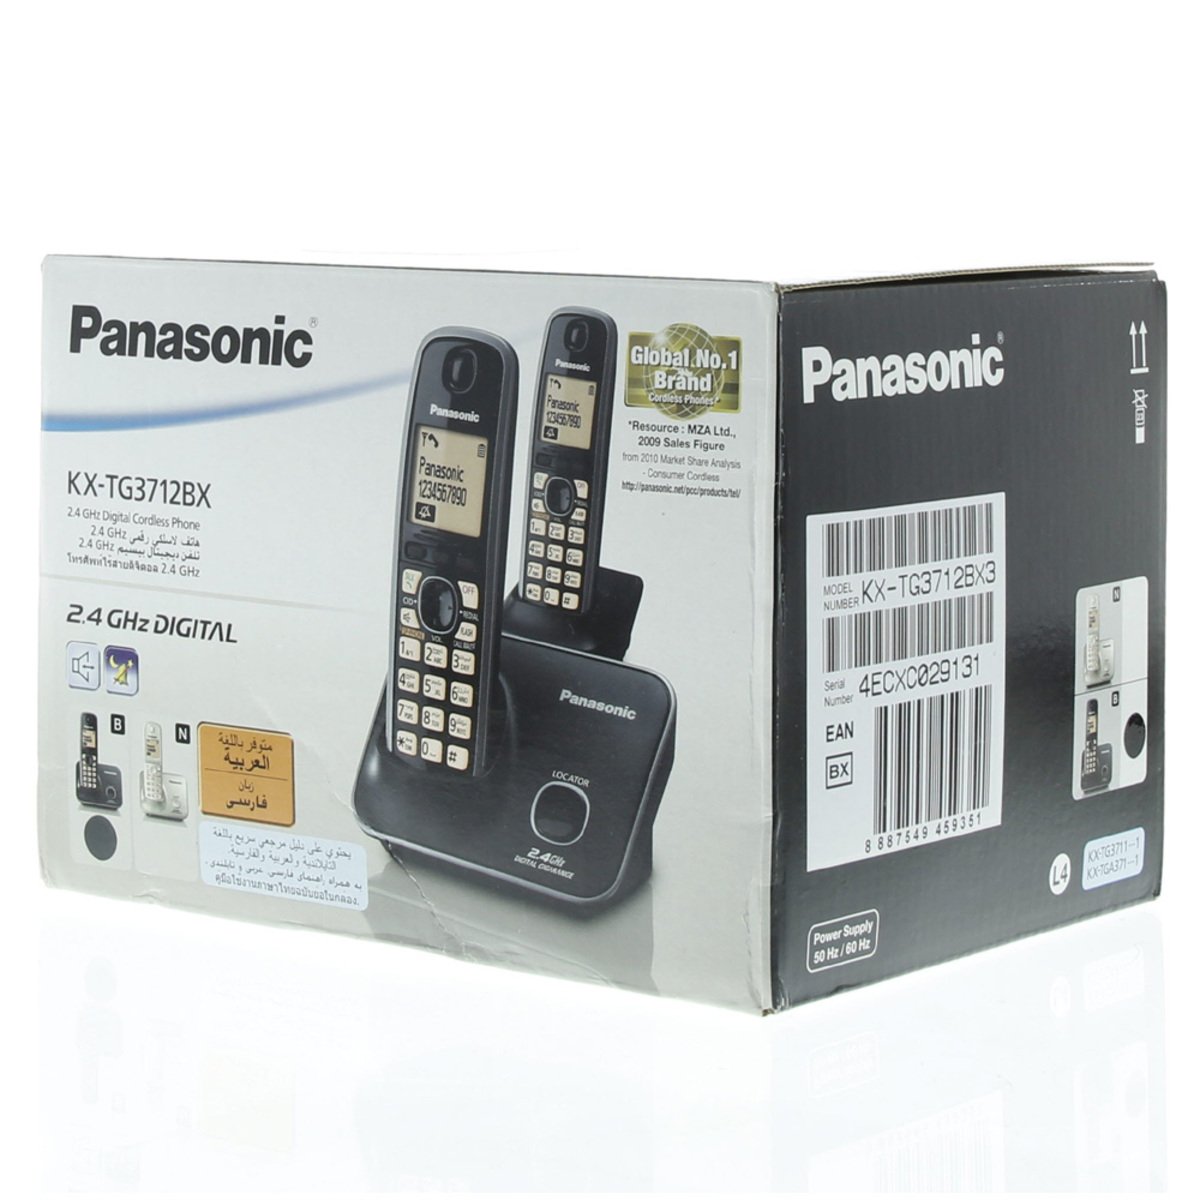 Panasonic Cordless Phone KXTG3712